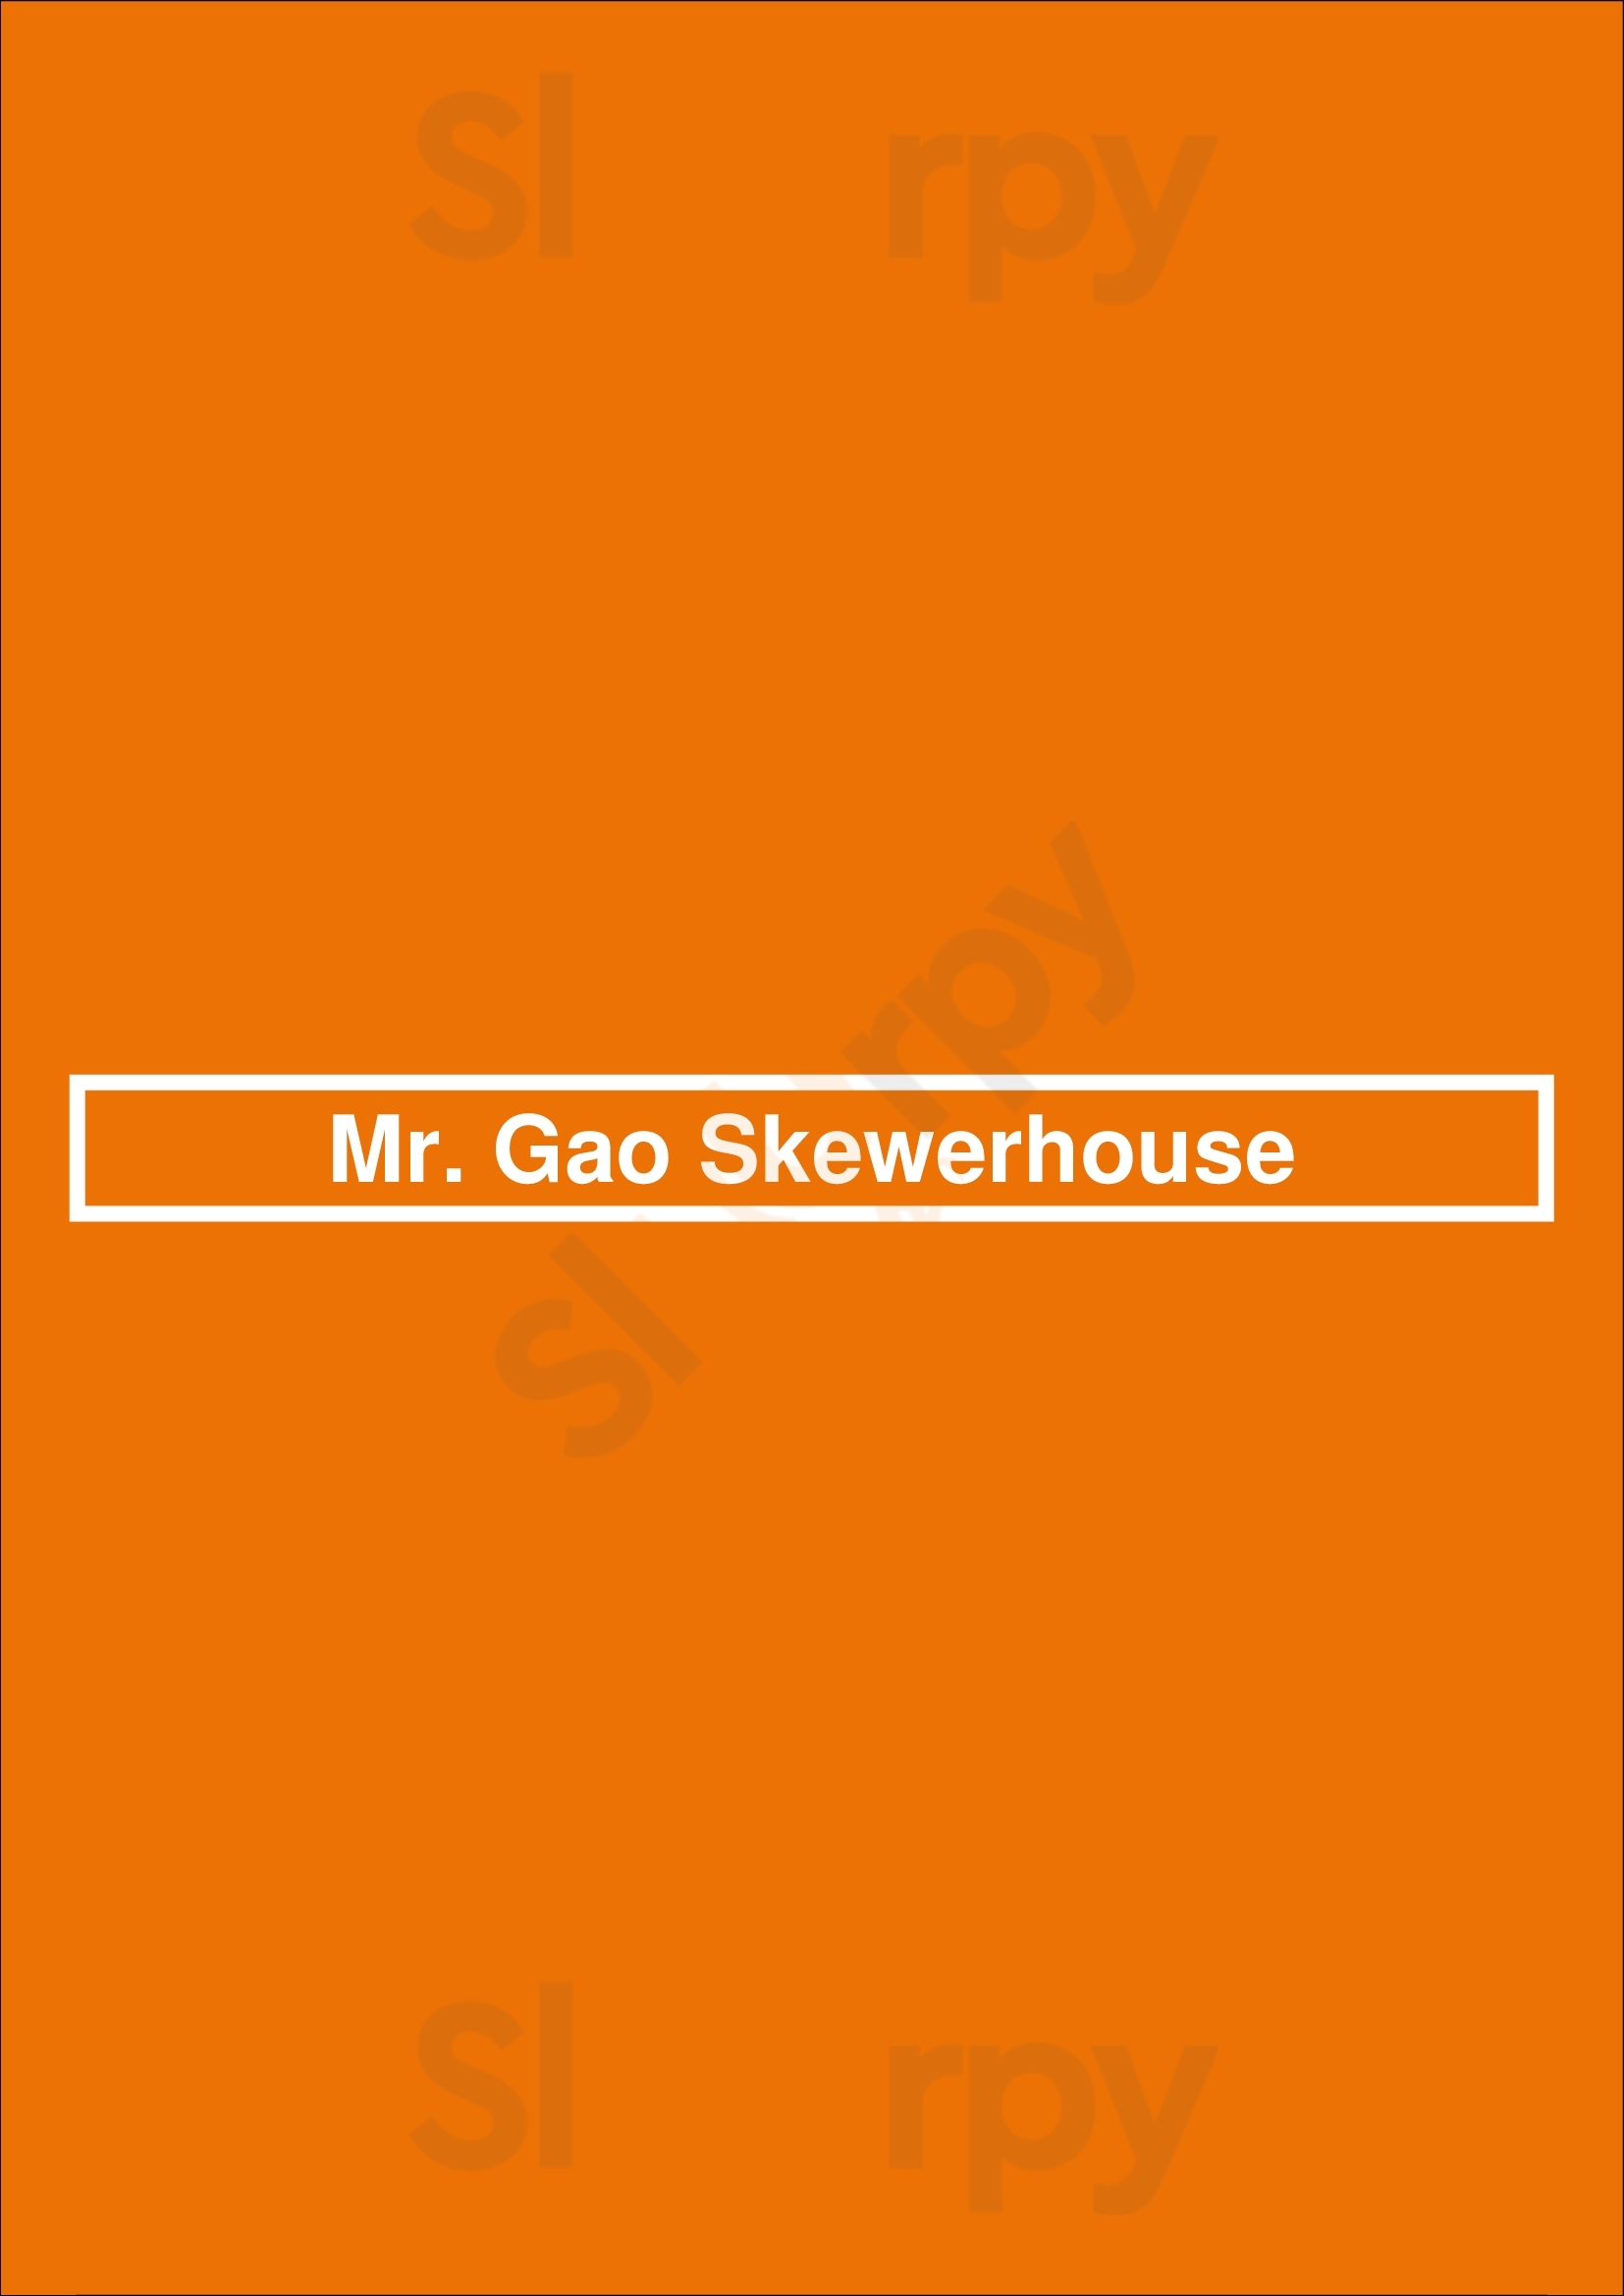 Mr. Gao Skewerhouse Mississauga Menu - 1